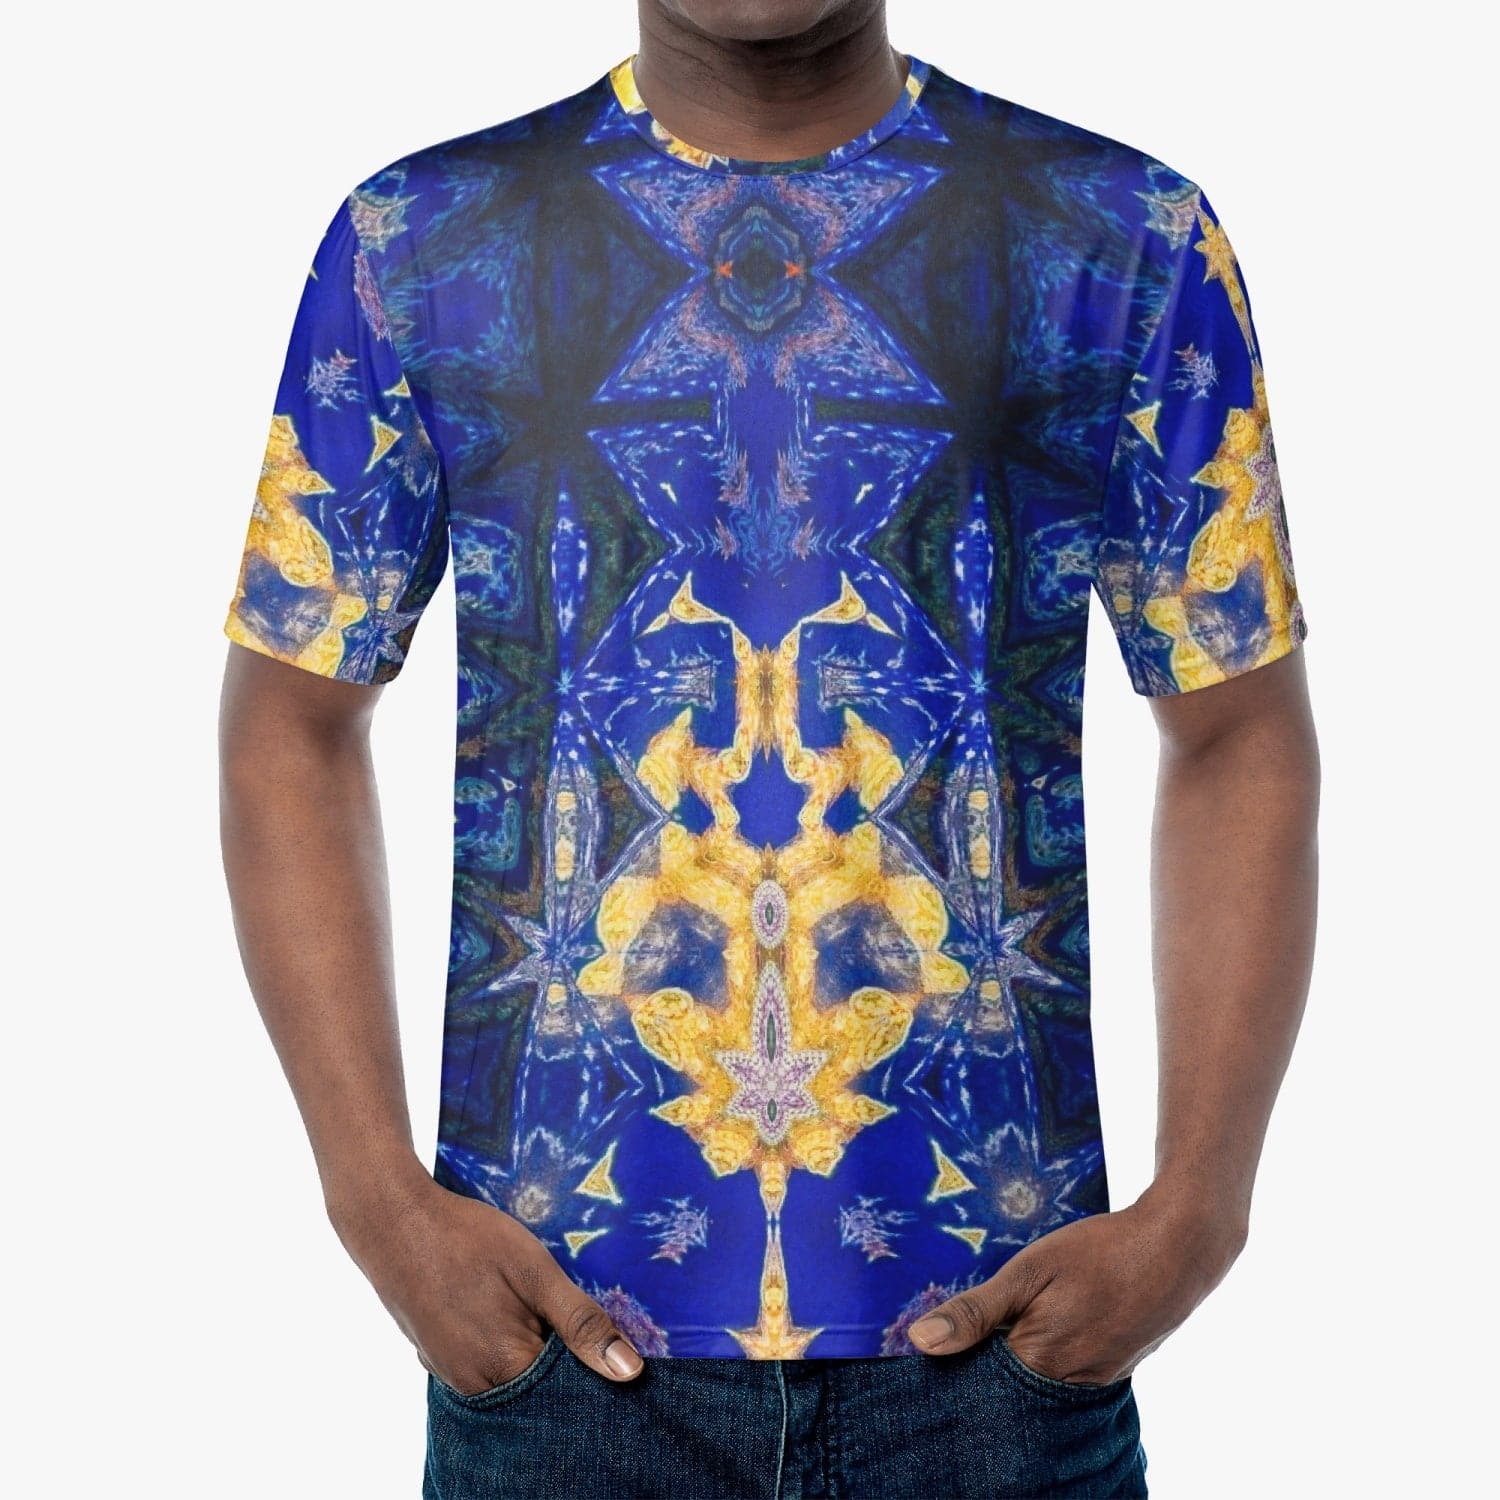 Sensus Studio Design Blue with Yellow Pattern Handmade T-shirt for Stylish Men